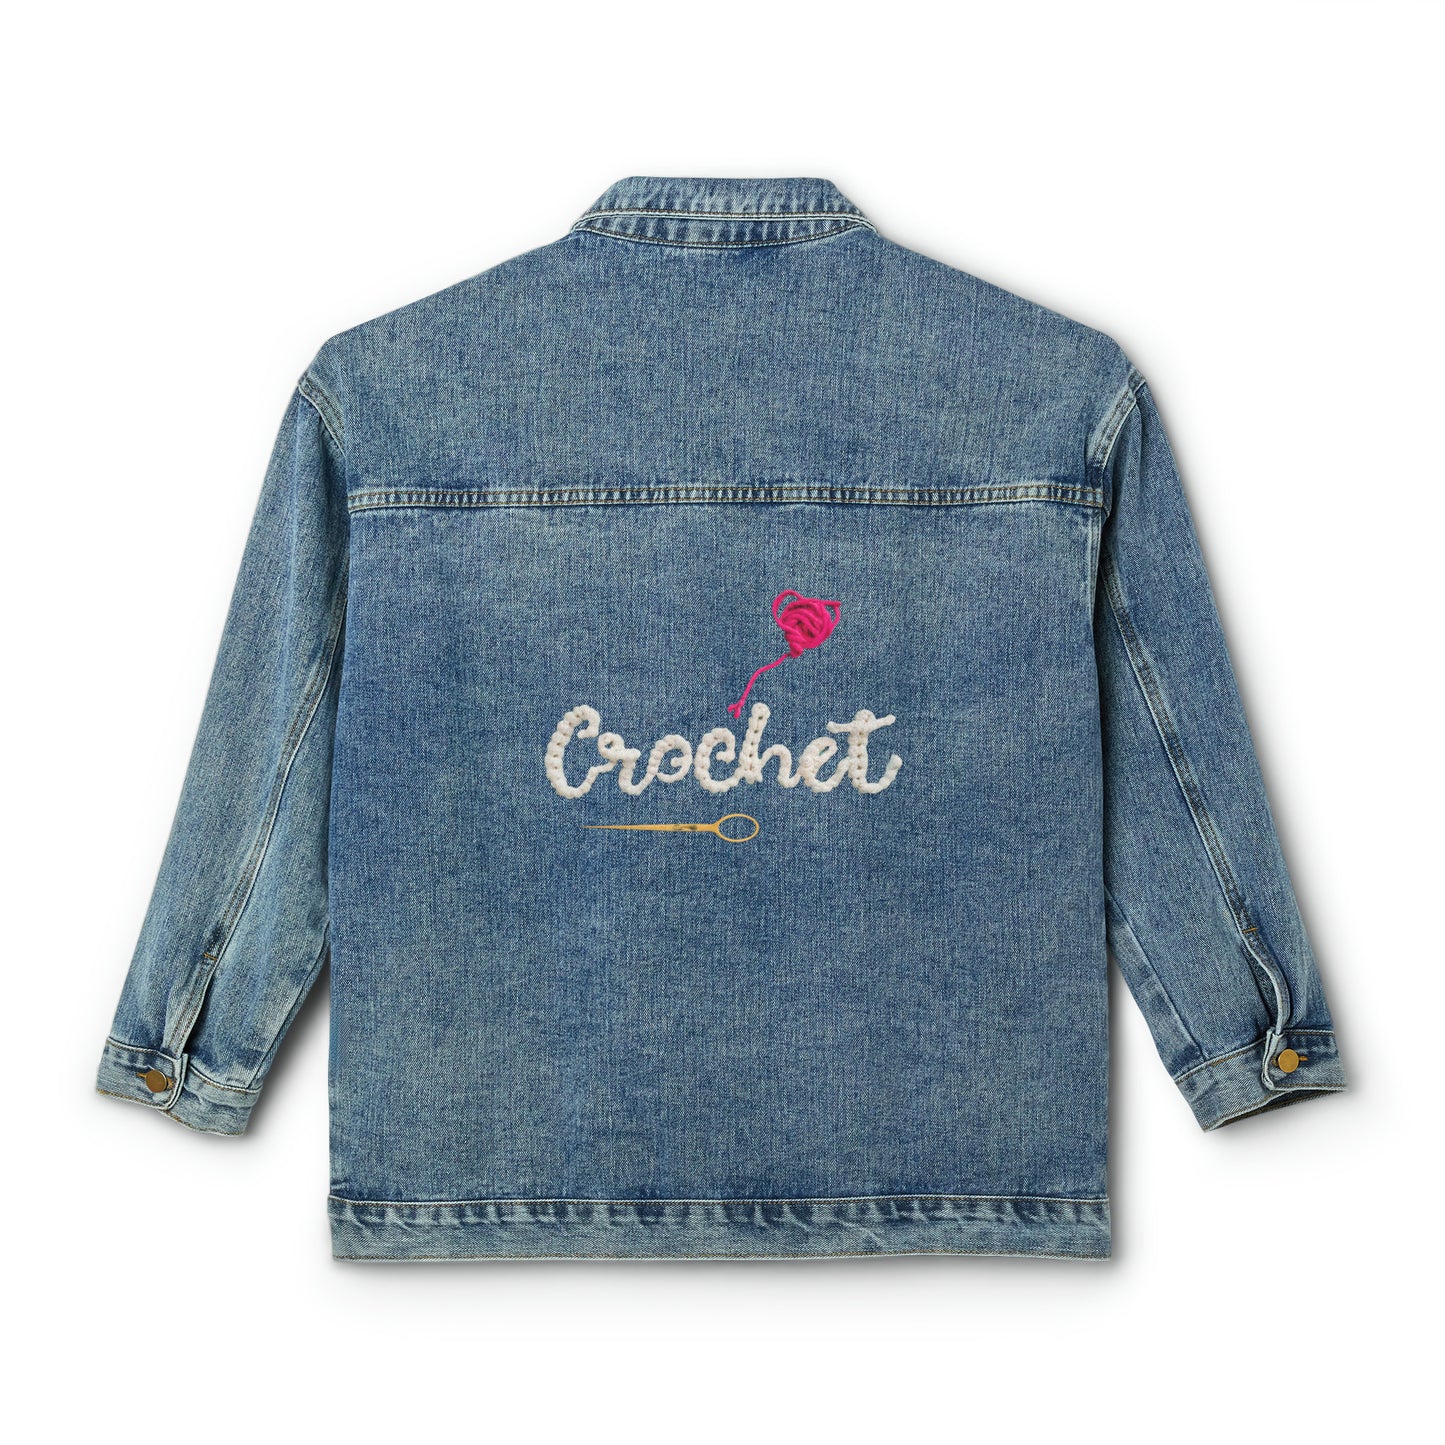 Crochet Graphic, Gift, Women's Denim Jacket